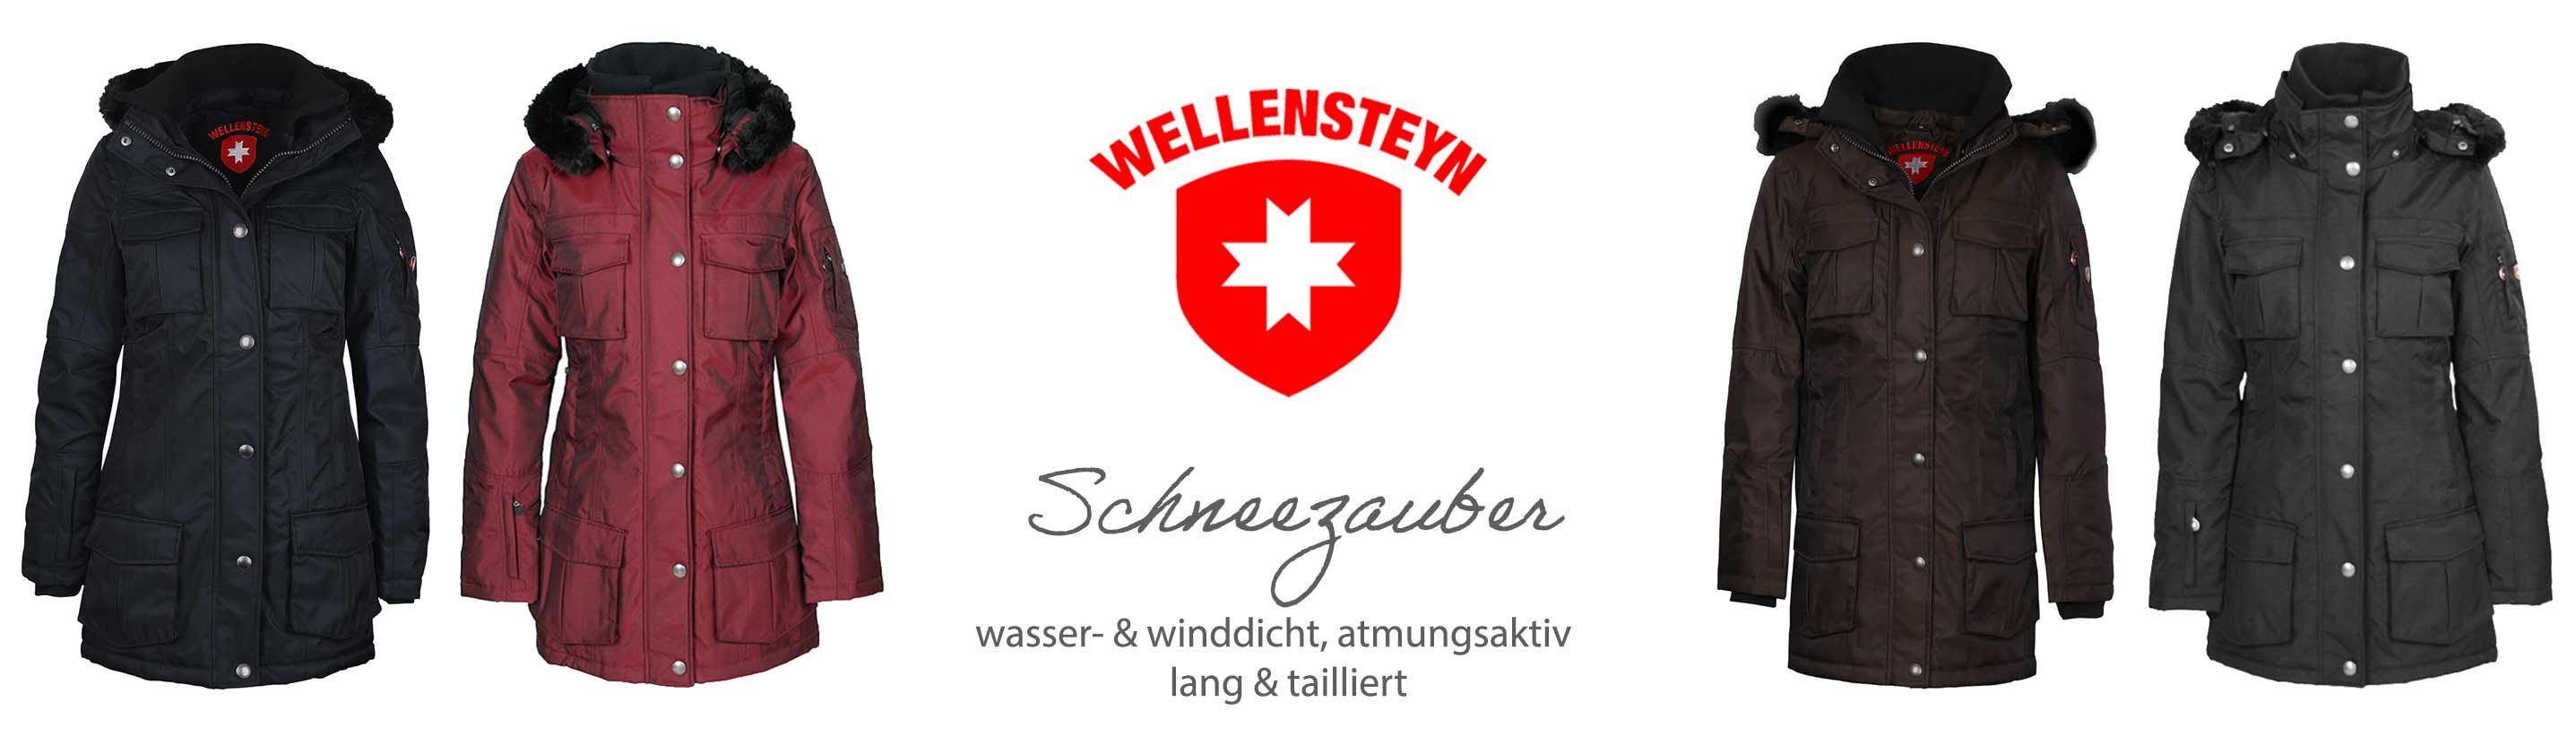 Wellensteyn Schneezauber